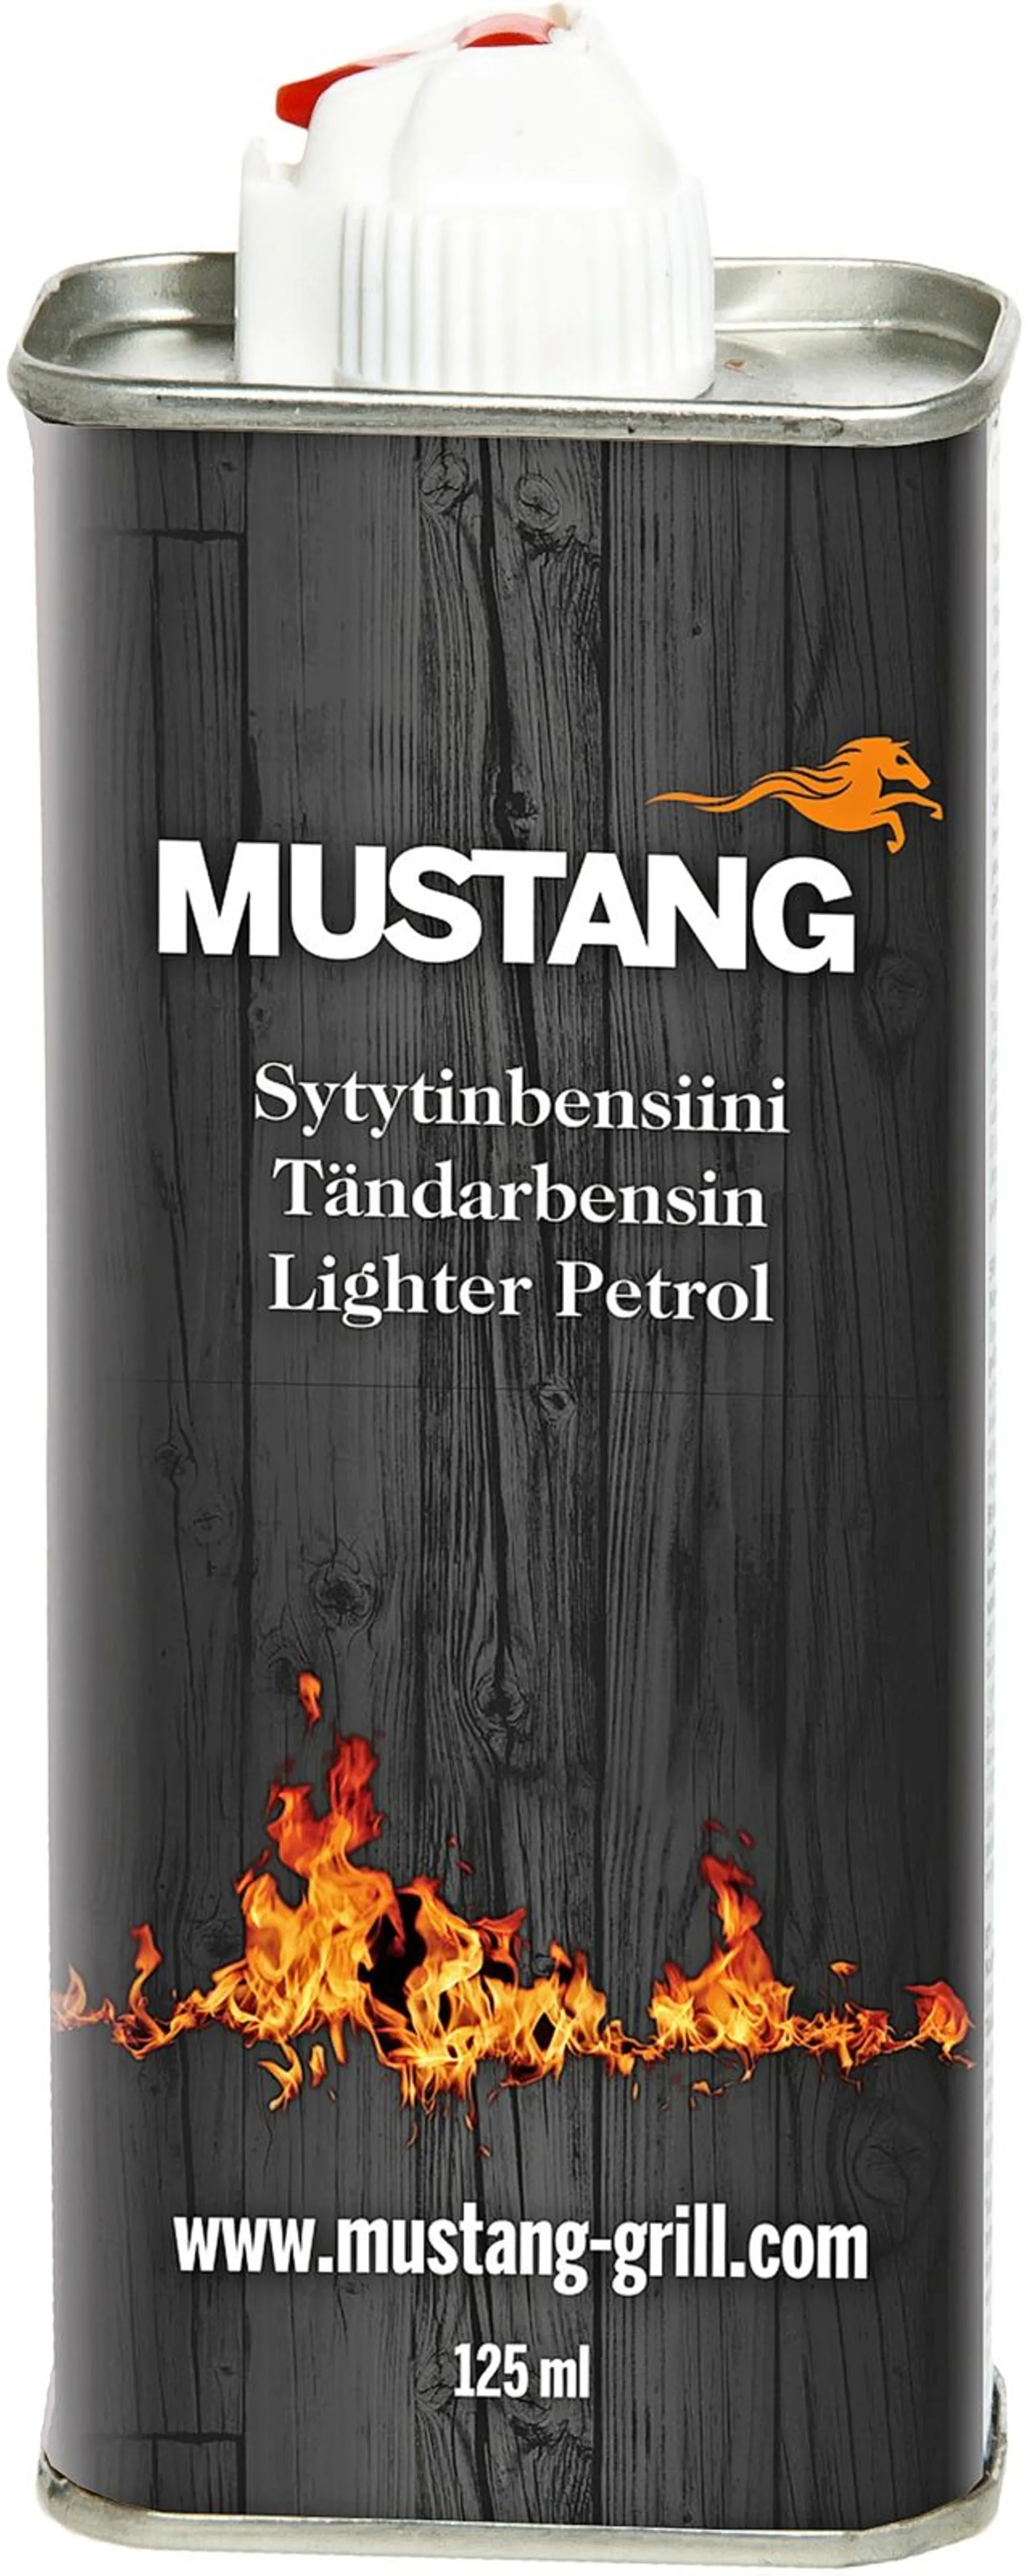 Mustang Sytytinbensiini 133 ml